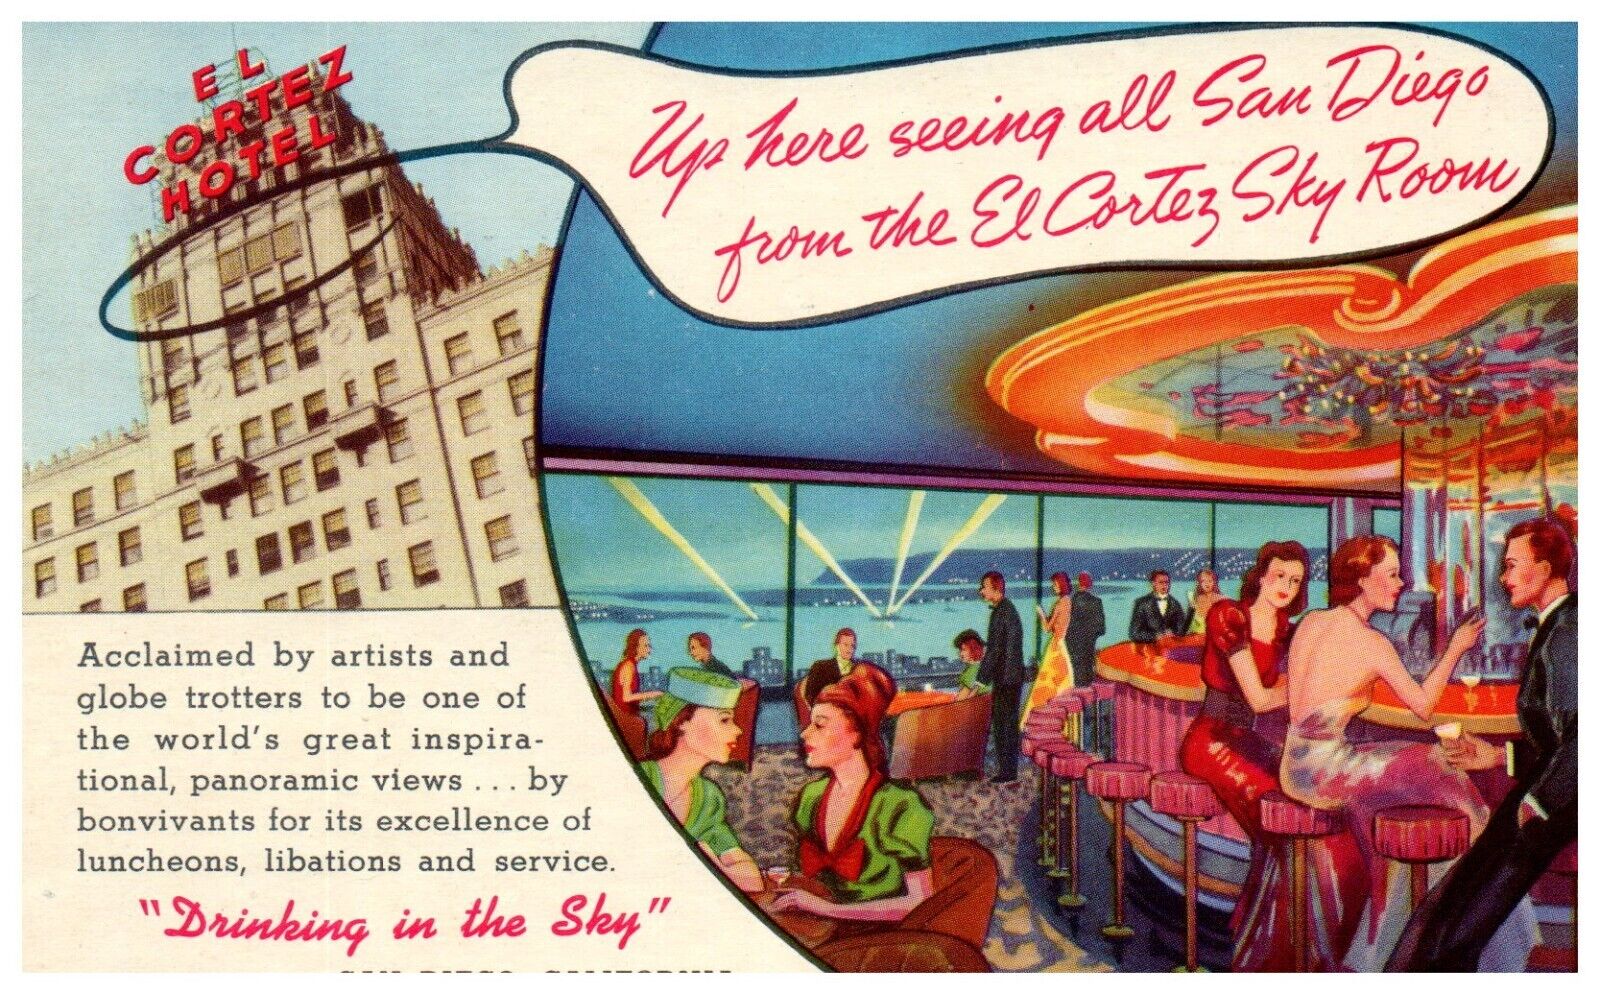 El Cortez Sky Room Hotel San Diego, California Hotel Motel Adv Postcard